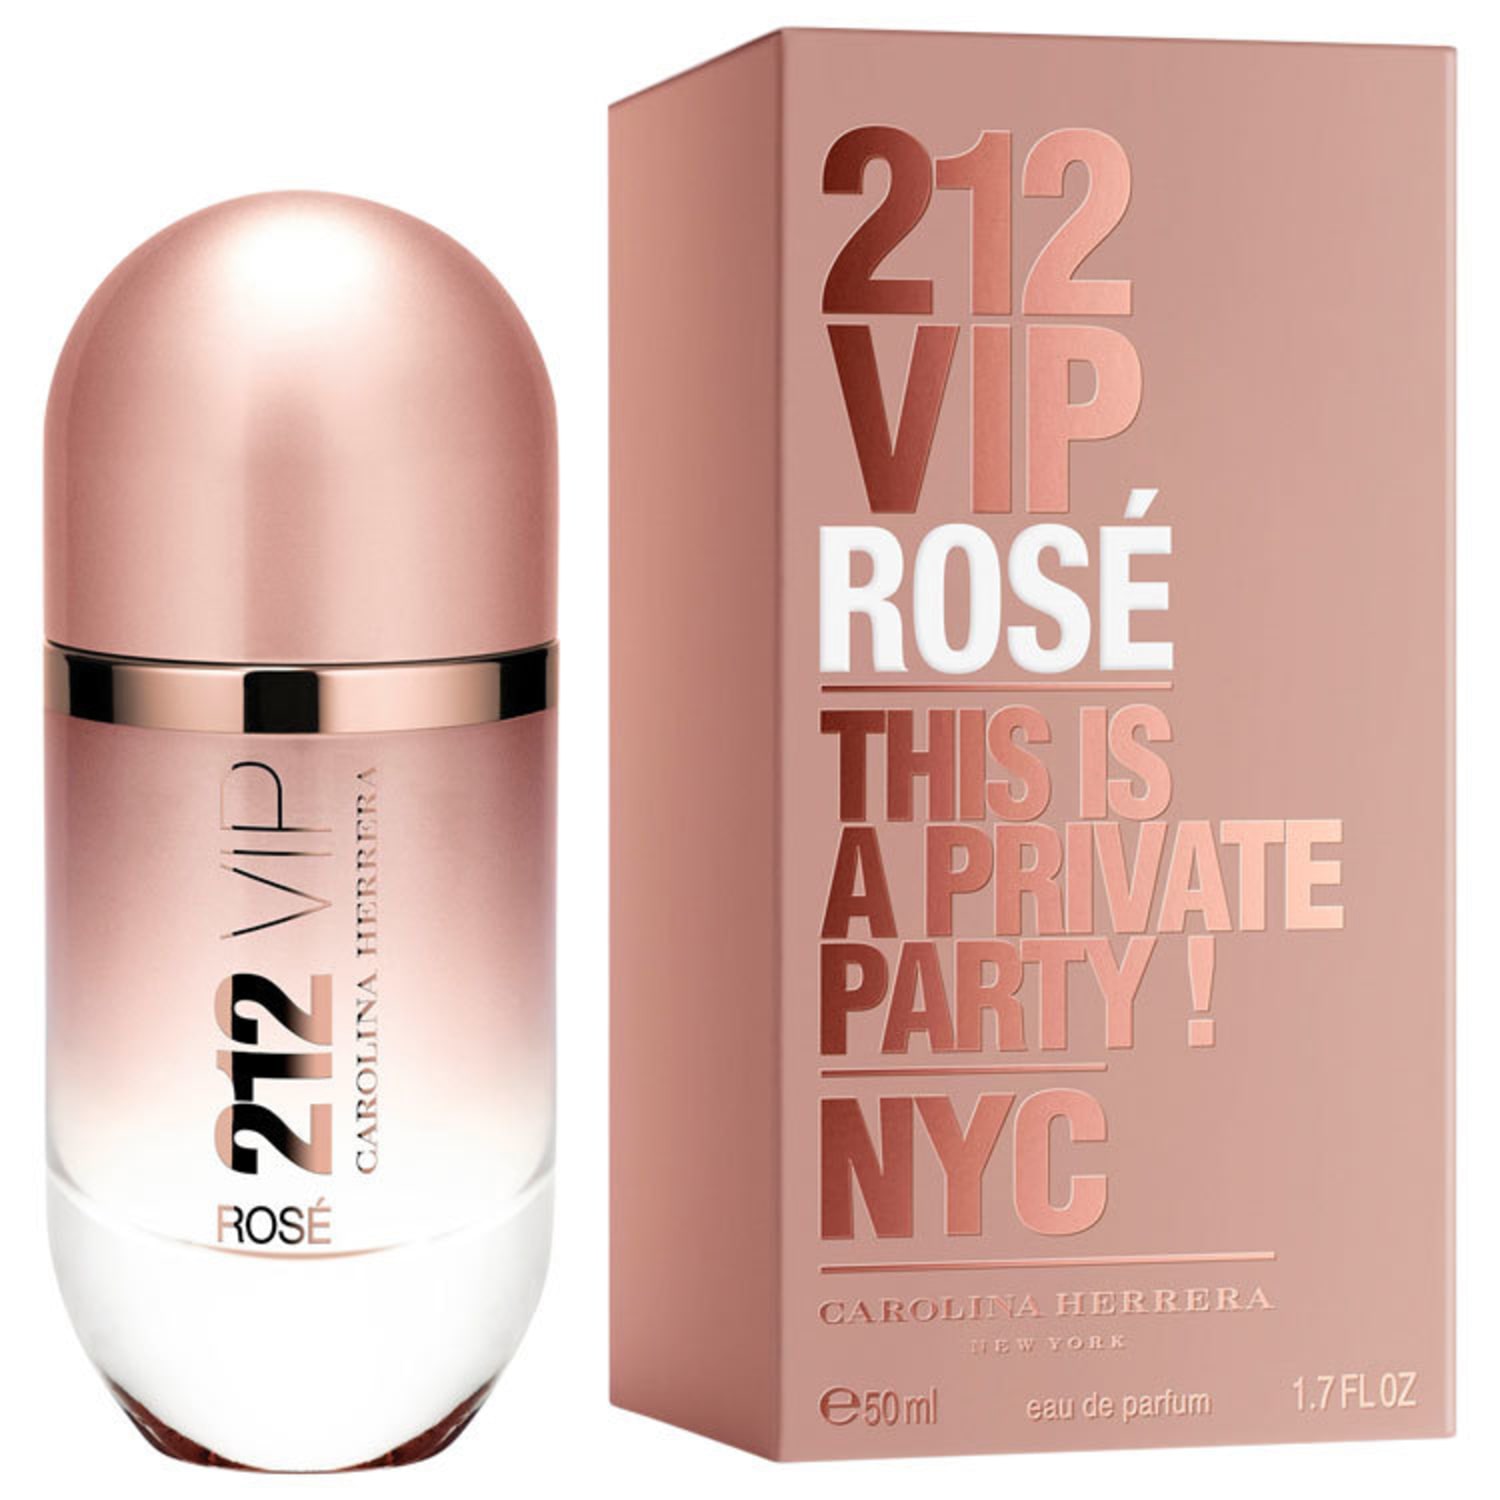 212 VIP Rosé Carolina Herrera Eau de Parfum - Perfume Feminino